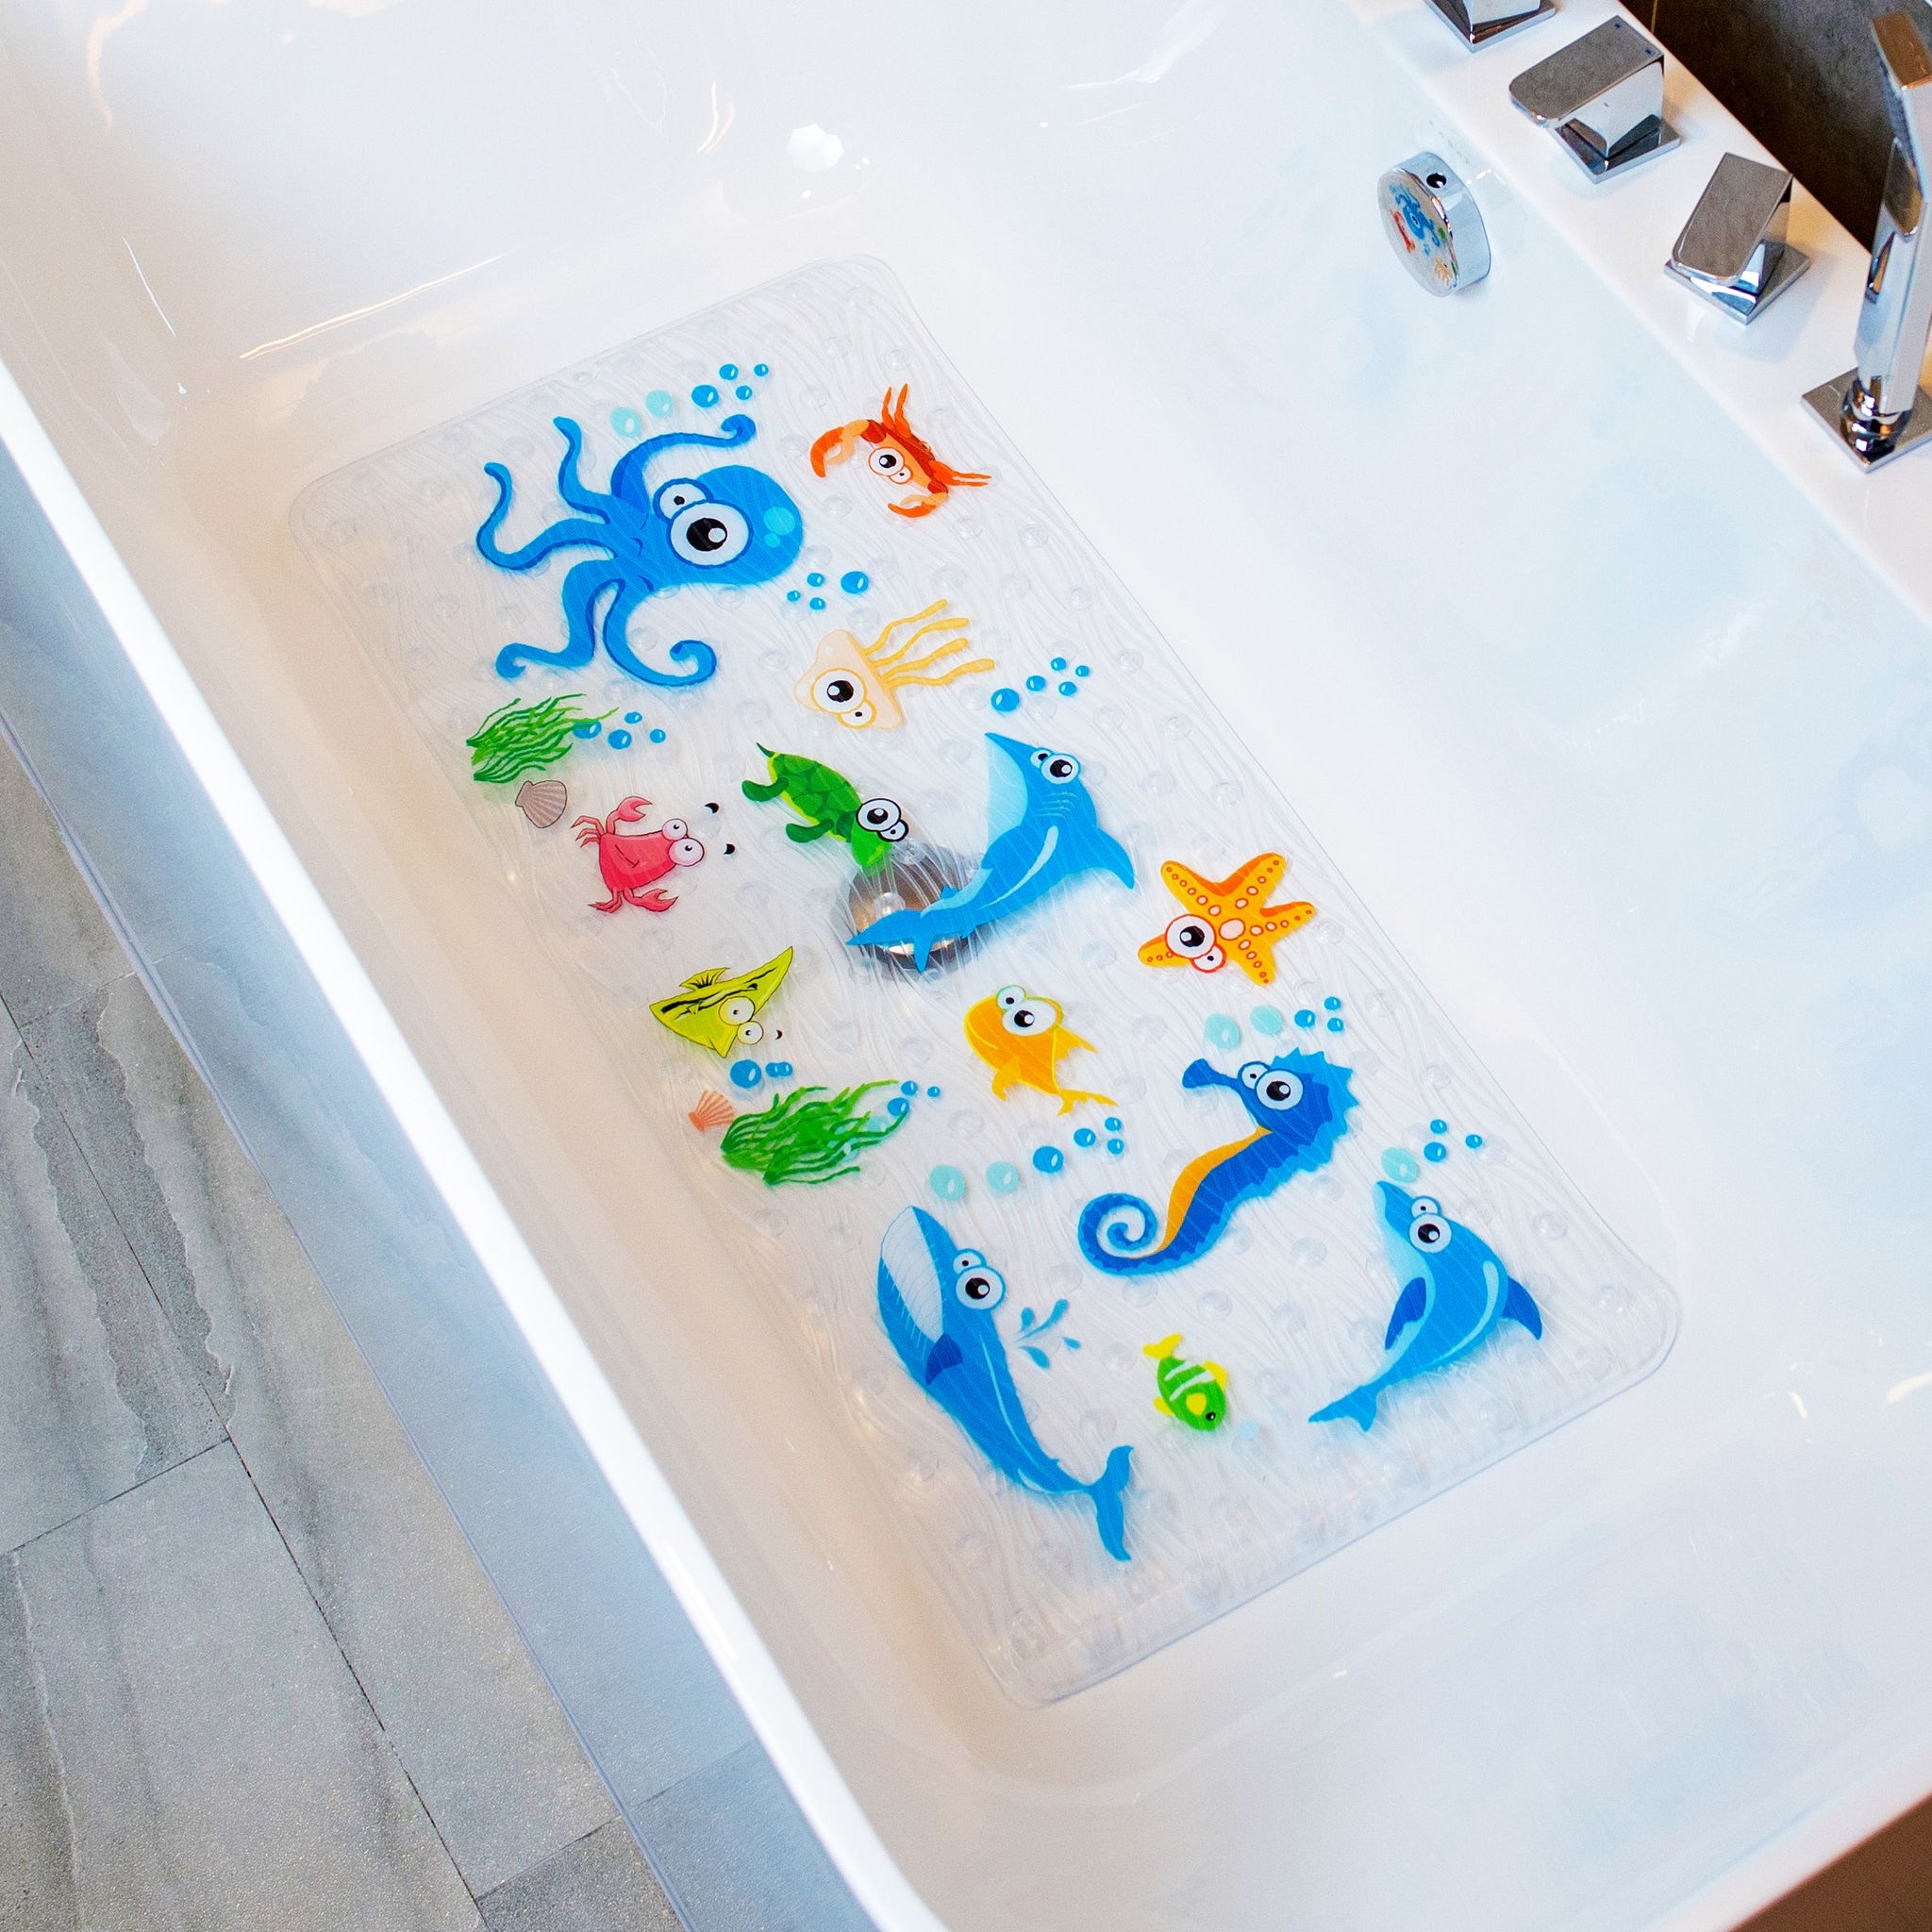 BEEHOMEE Bath Mats for Tub Kids - 35x15,Machine Washable XL Size Bathr